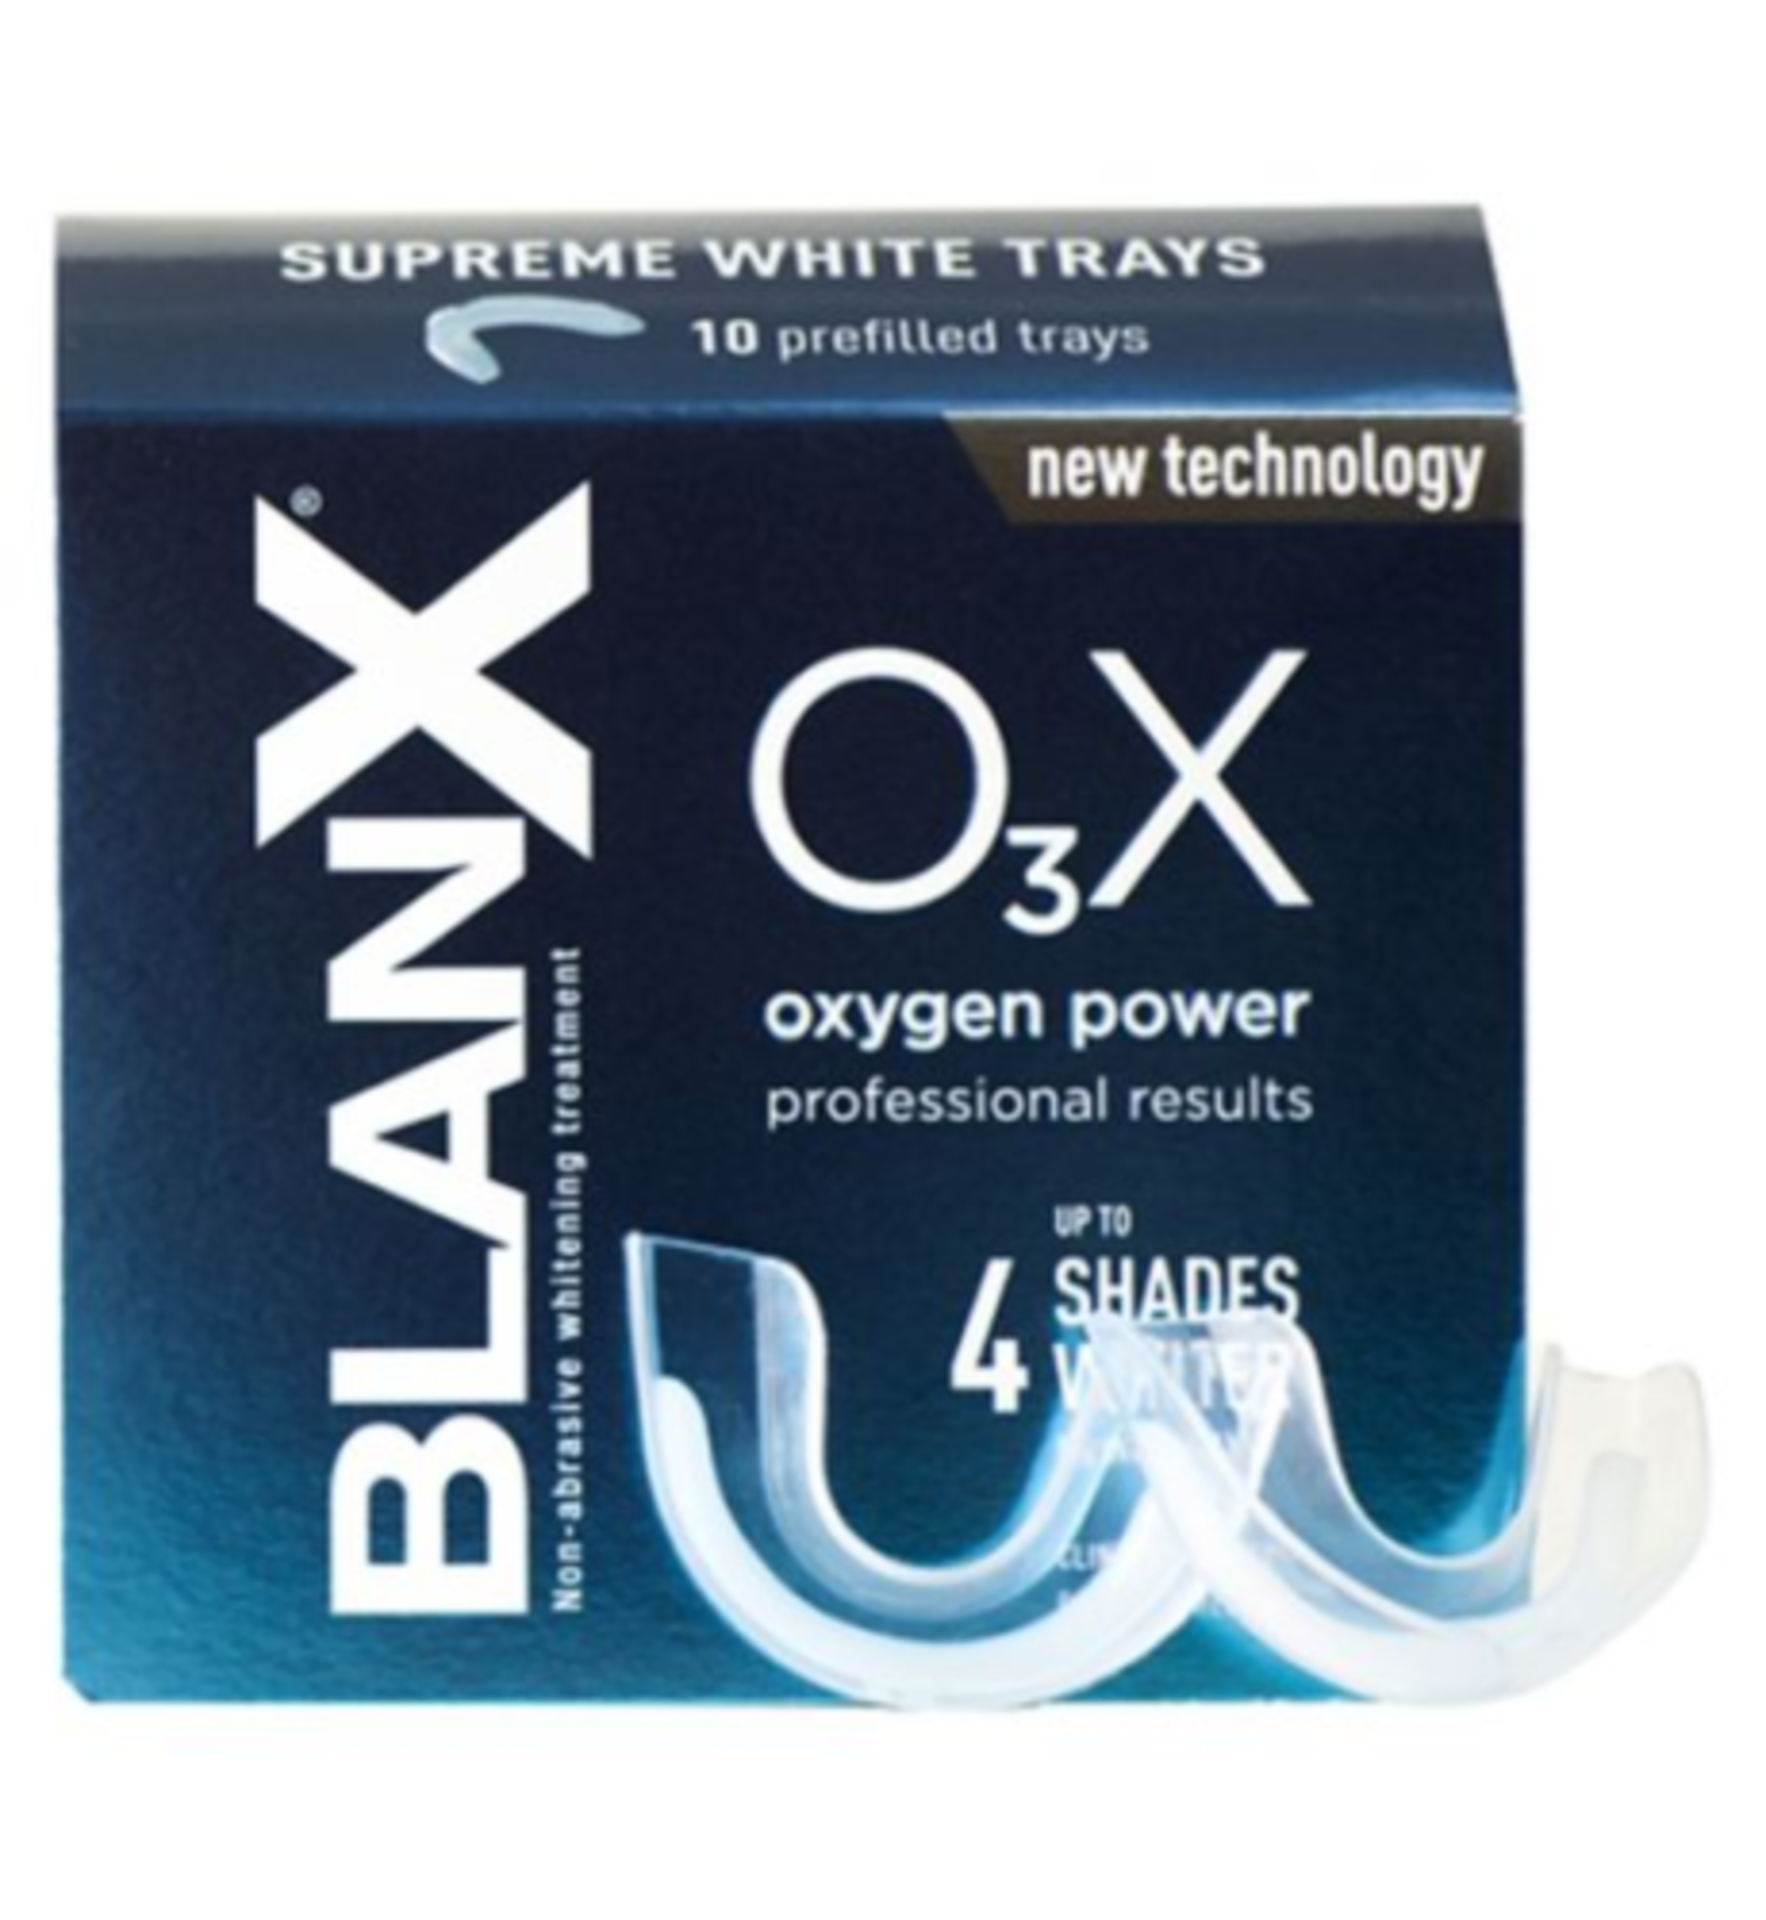 Blanx o3x supreme white trays 10 prefilled trays x 3 rrp £120